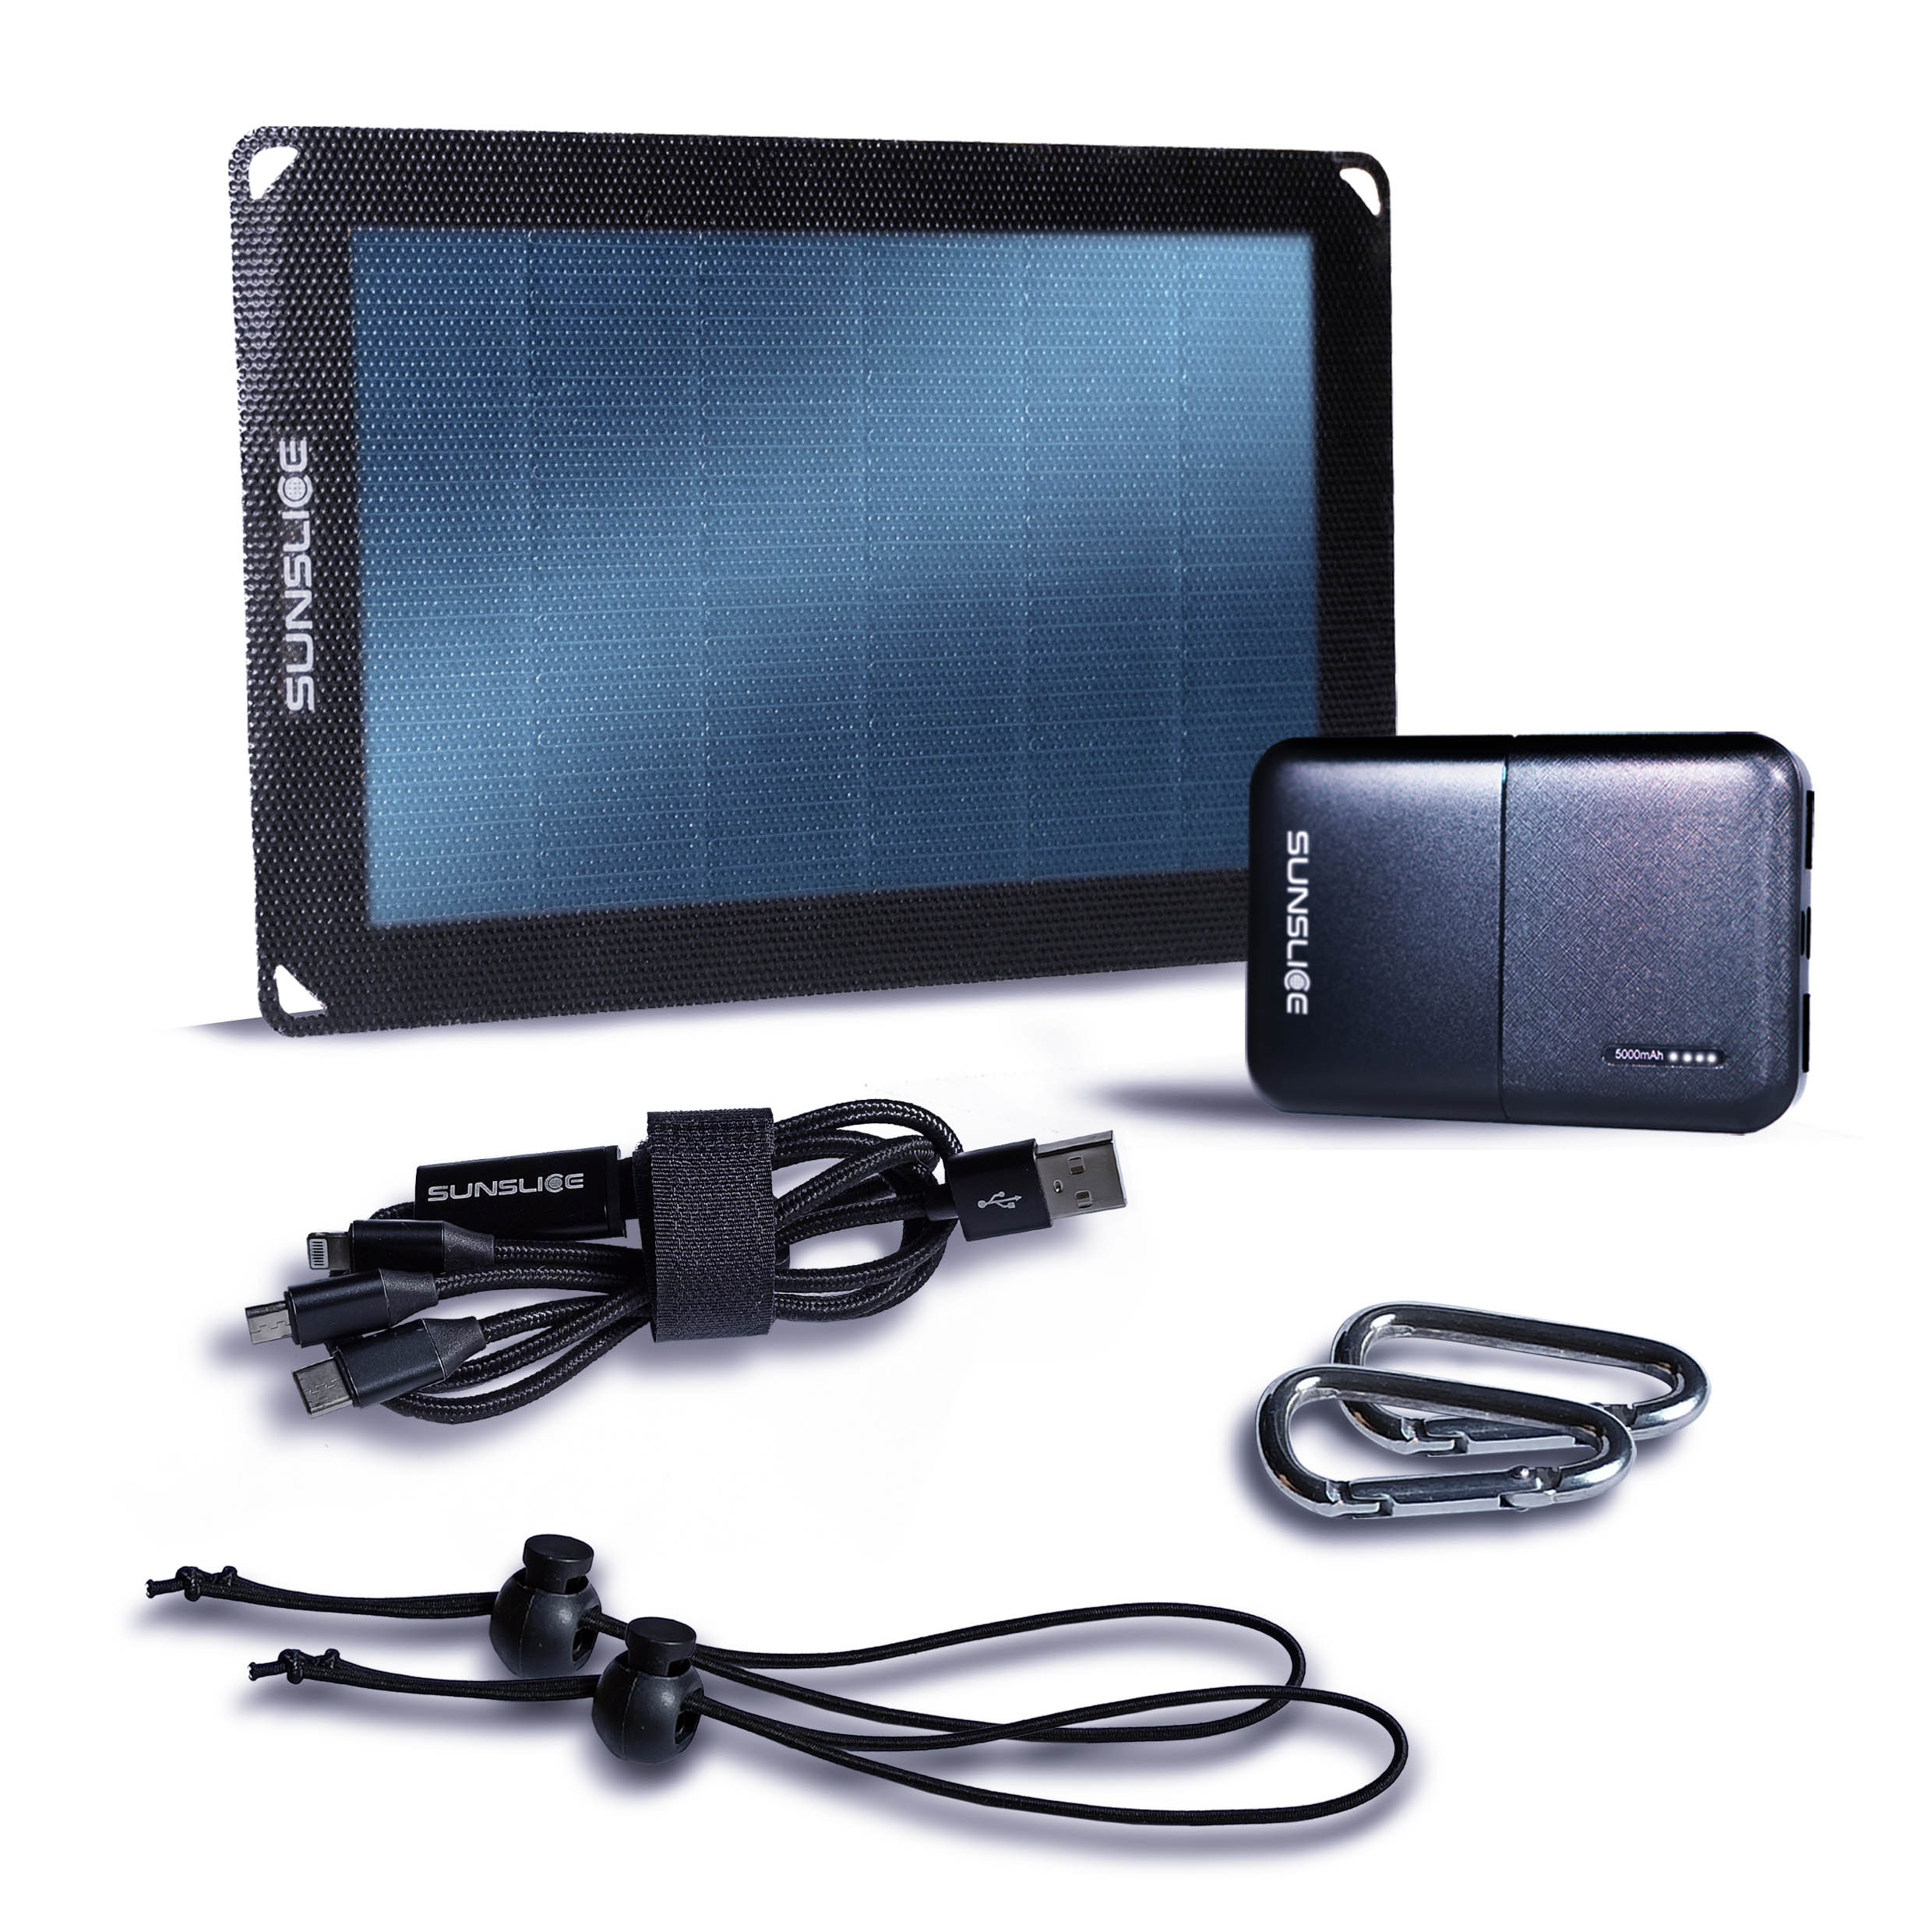 sunslice tragbares 6-Watt-Solarpanel und 5000-mAh-Powerbank Nomad Kit